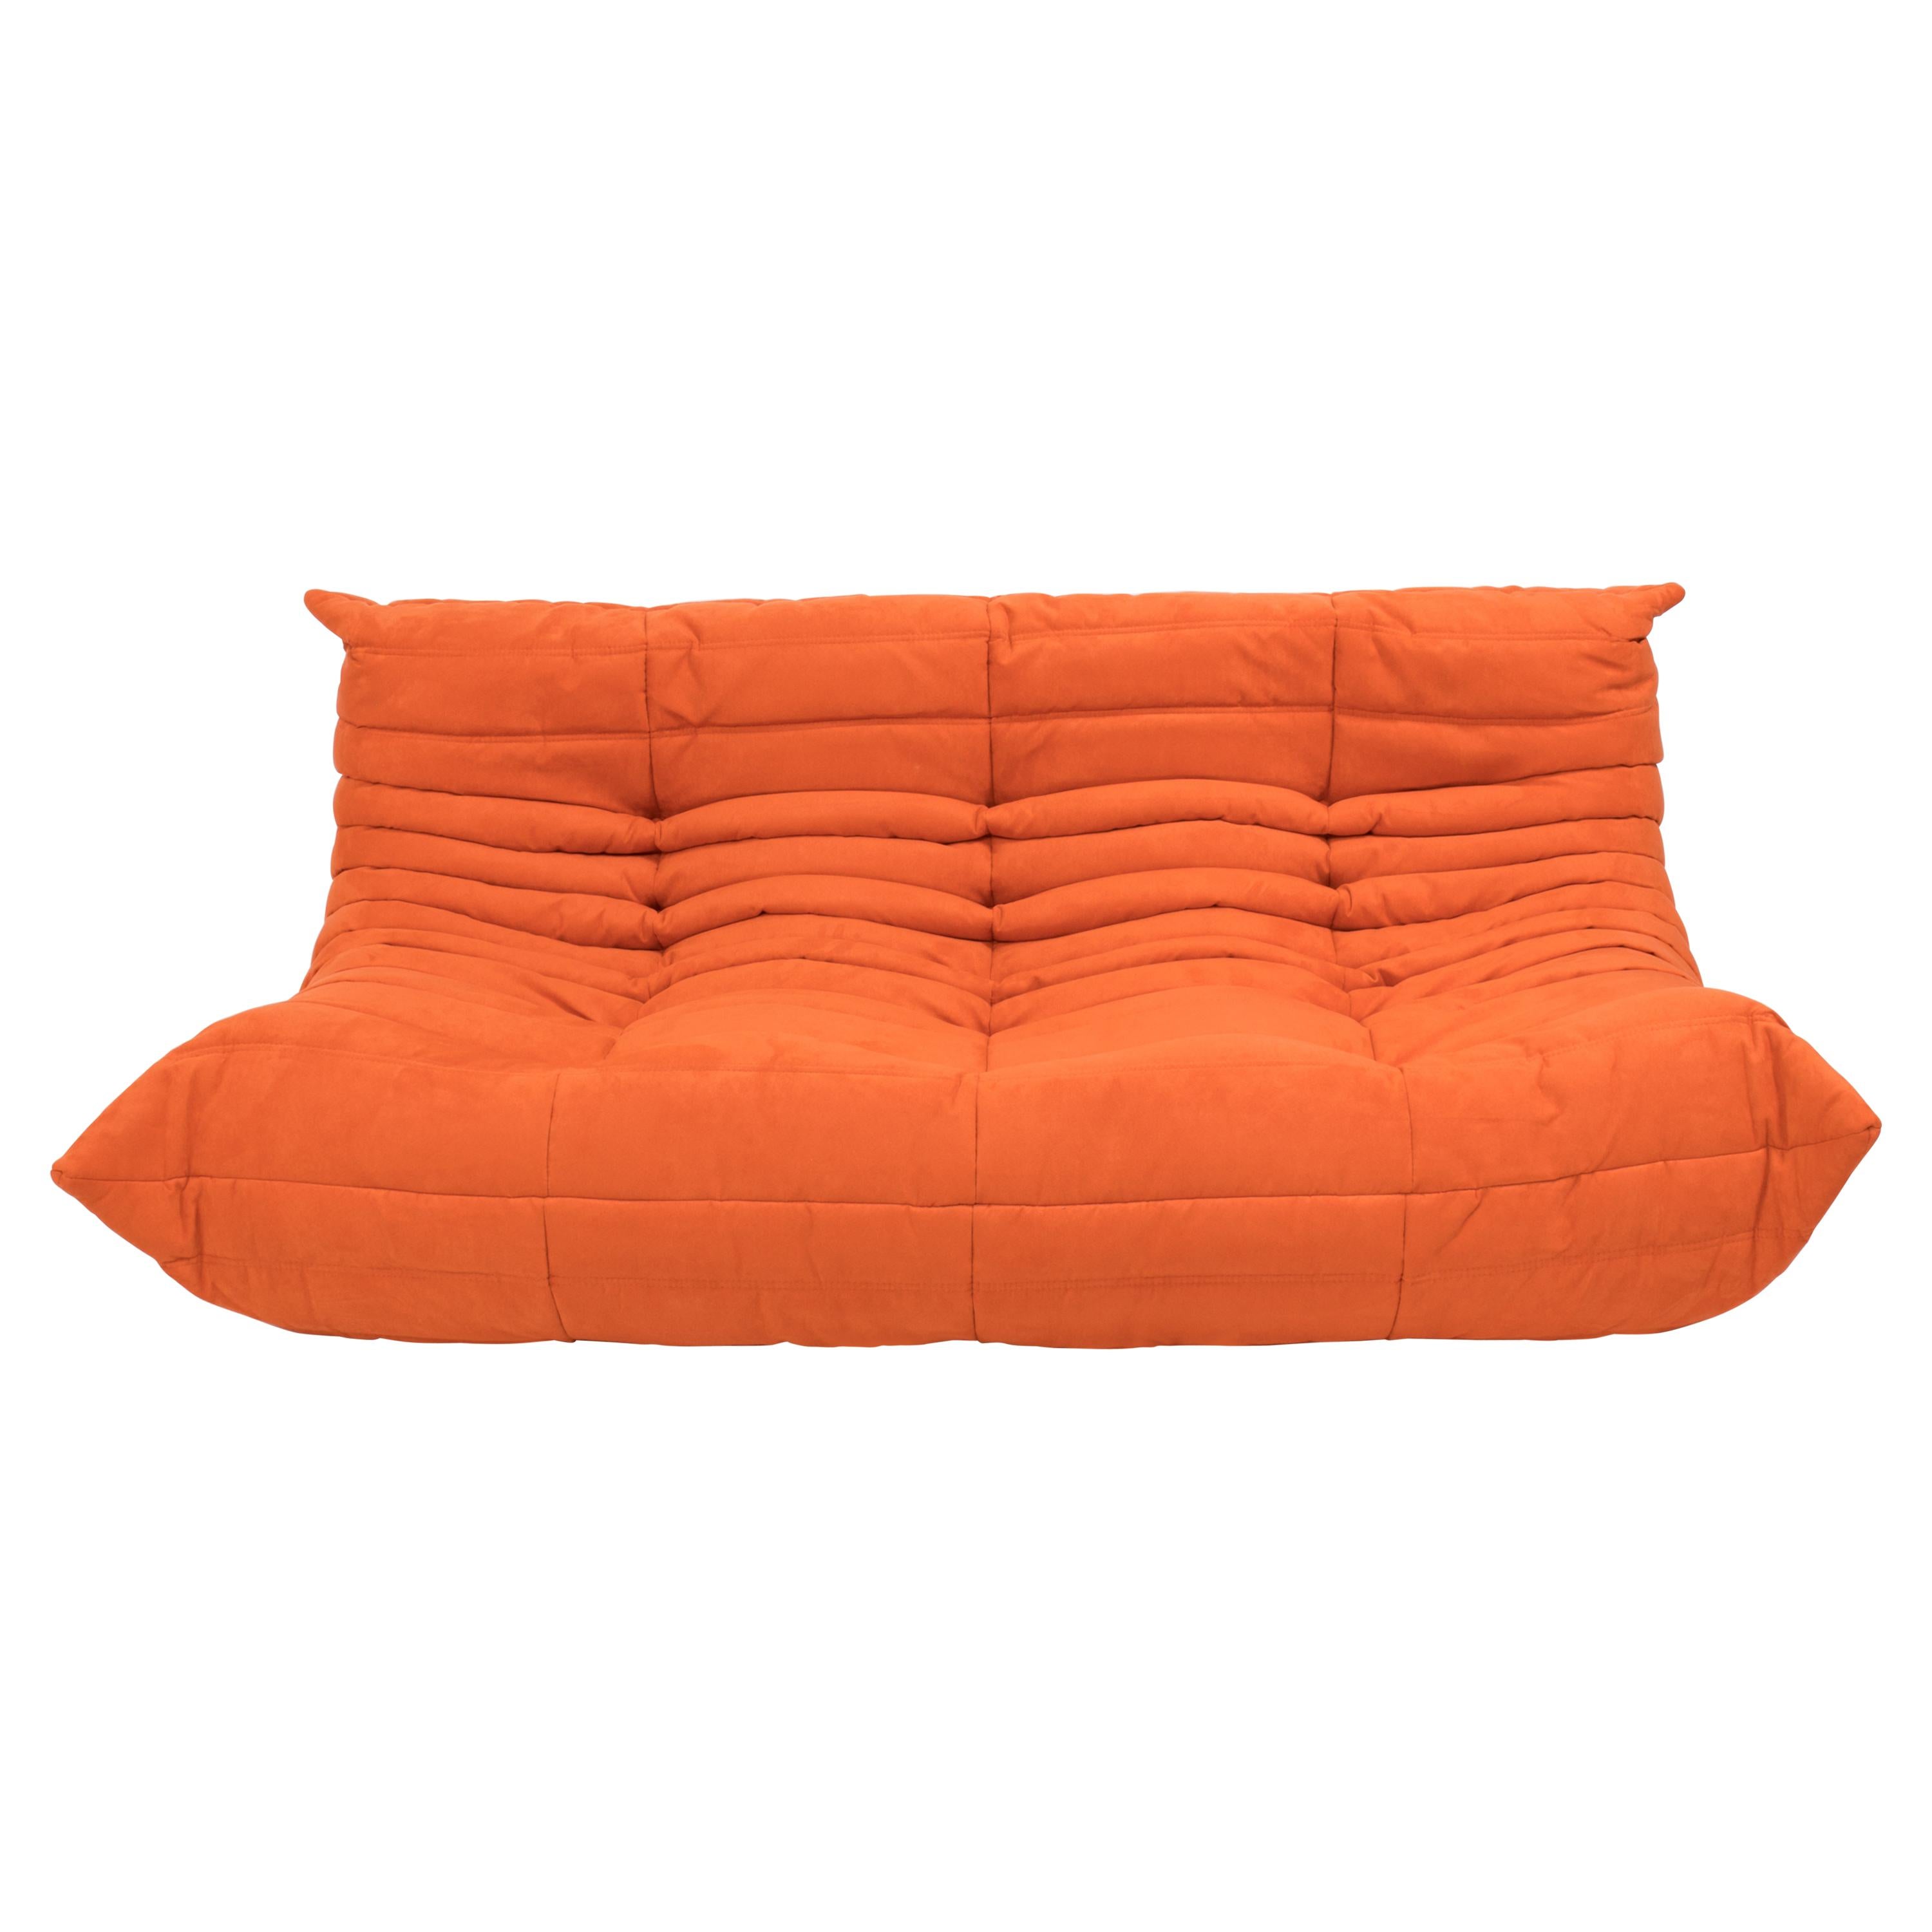 Midcentury Togo Orange Large Sofa by Michel Ducaroy for Ligne Roset